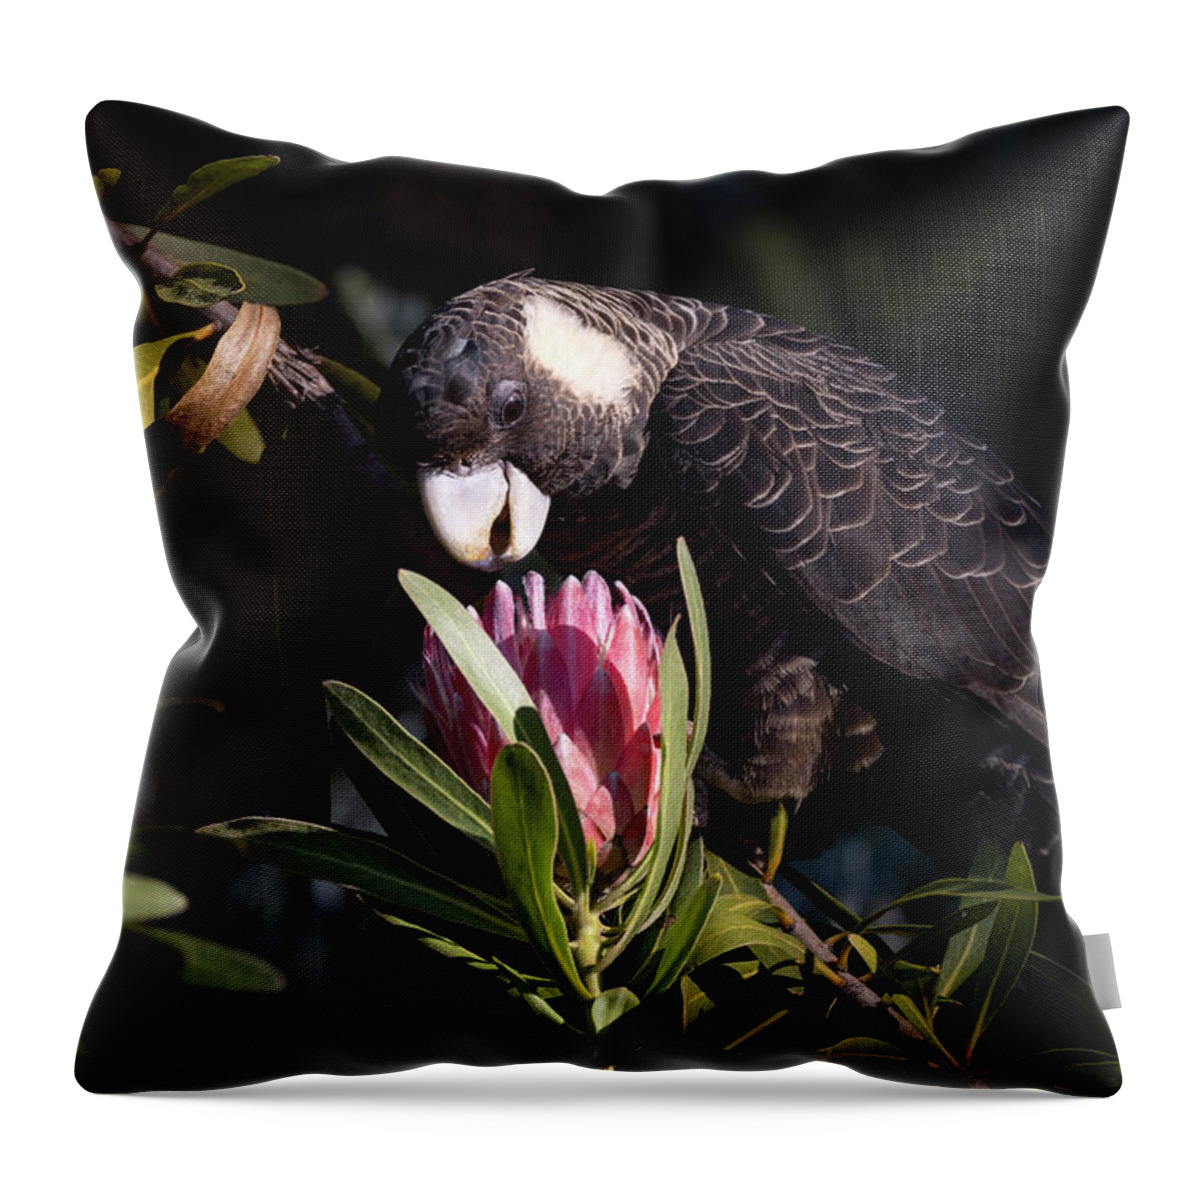 Carnaby's Black Cockatoo Throw Pillow featuring the photograph Carnaby's Black Cockatoo Hen #2 by Diana Andersen